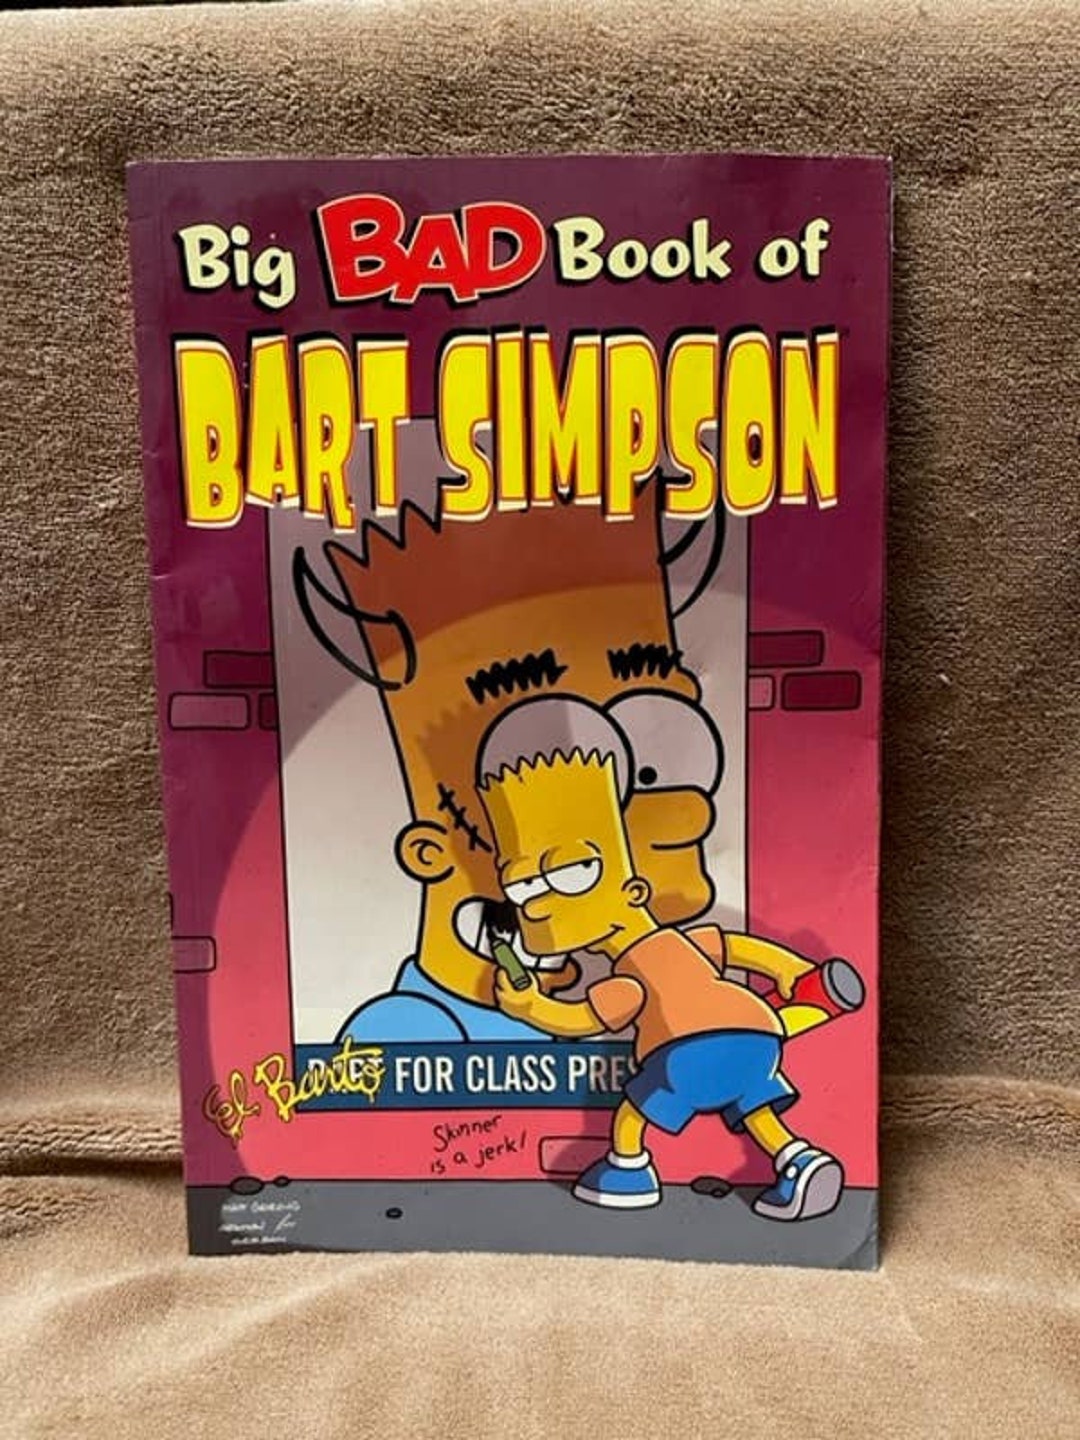 Simpson　Simpson　Bart　2003　of　Comics　Book　Bad　Big　Etsy